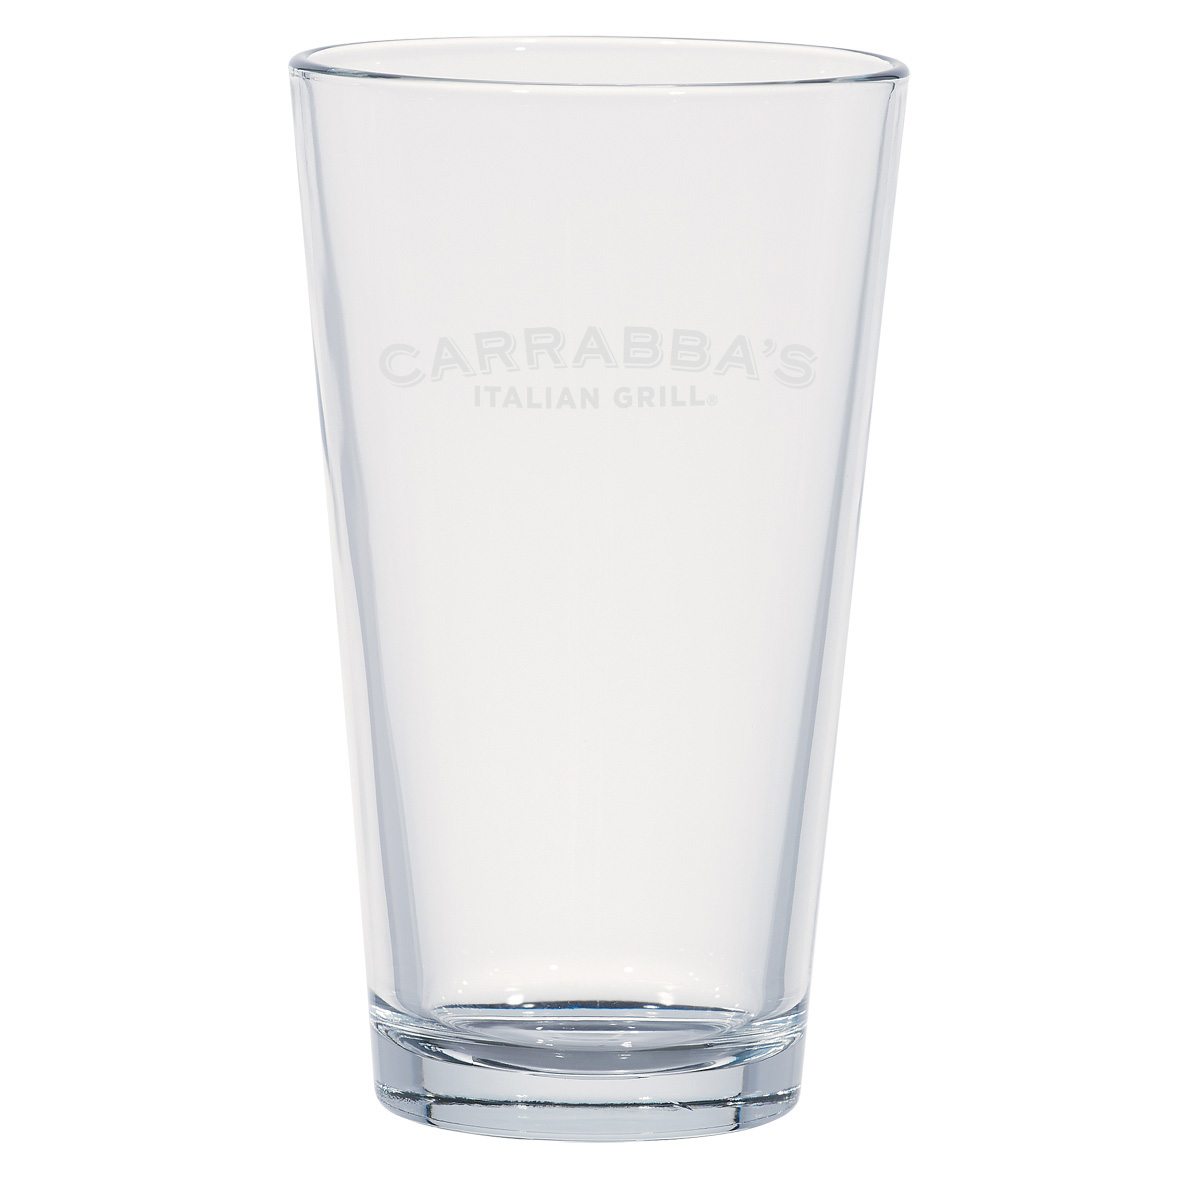 Zatarain's 16 oz Pint Glass (set of 2) – Shop McCormick